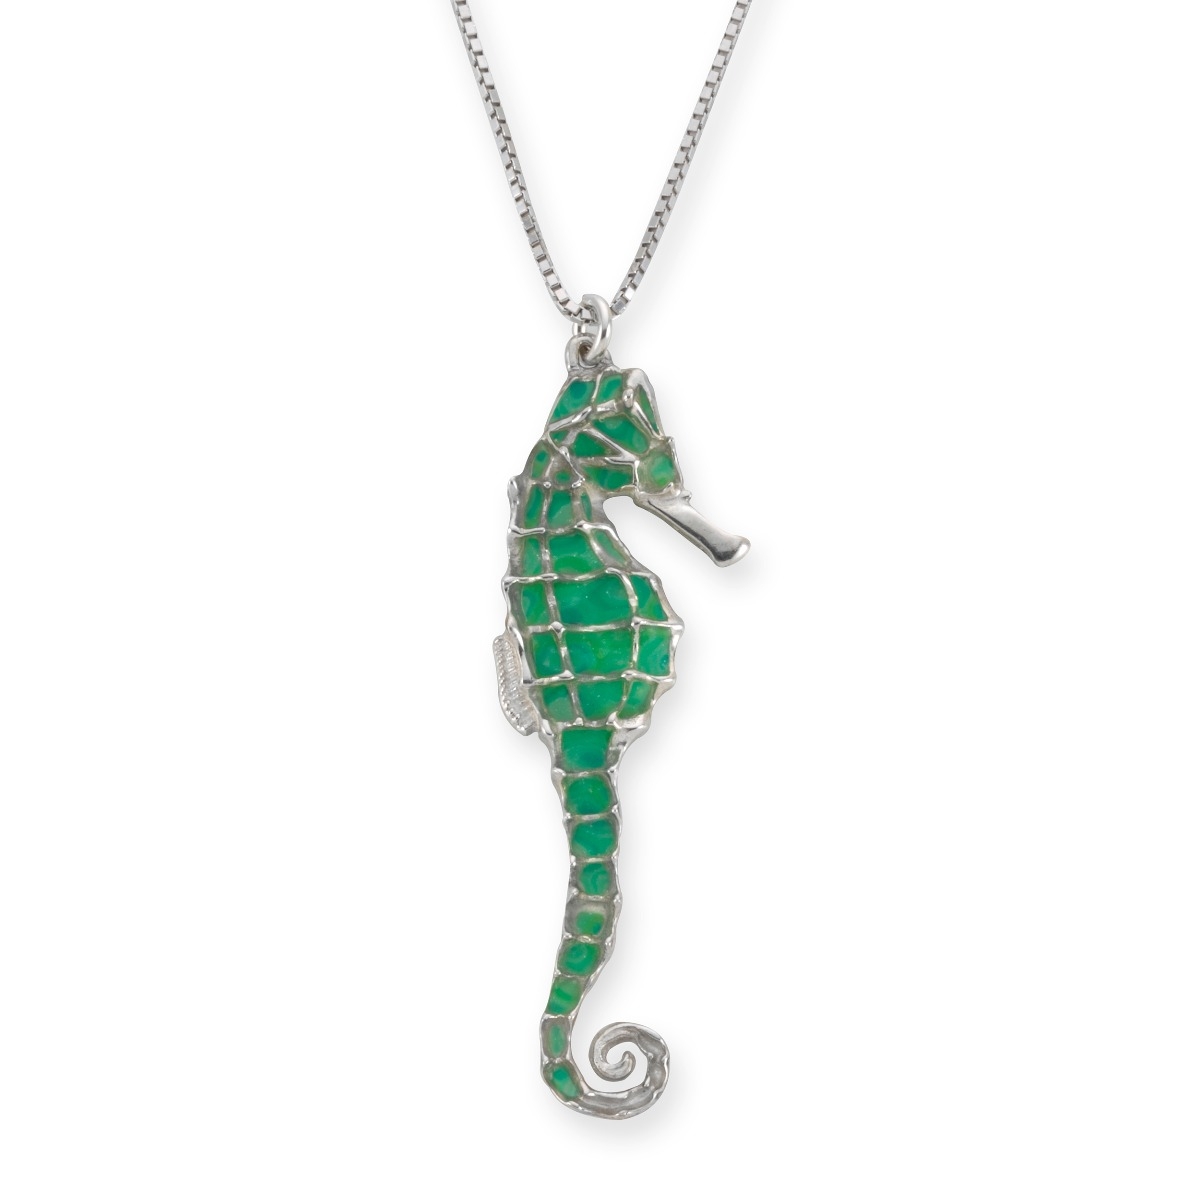 Adina Plastelina 925 Sterling Silver Seahorse Necklace - Translucent Jade - 1